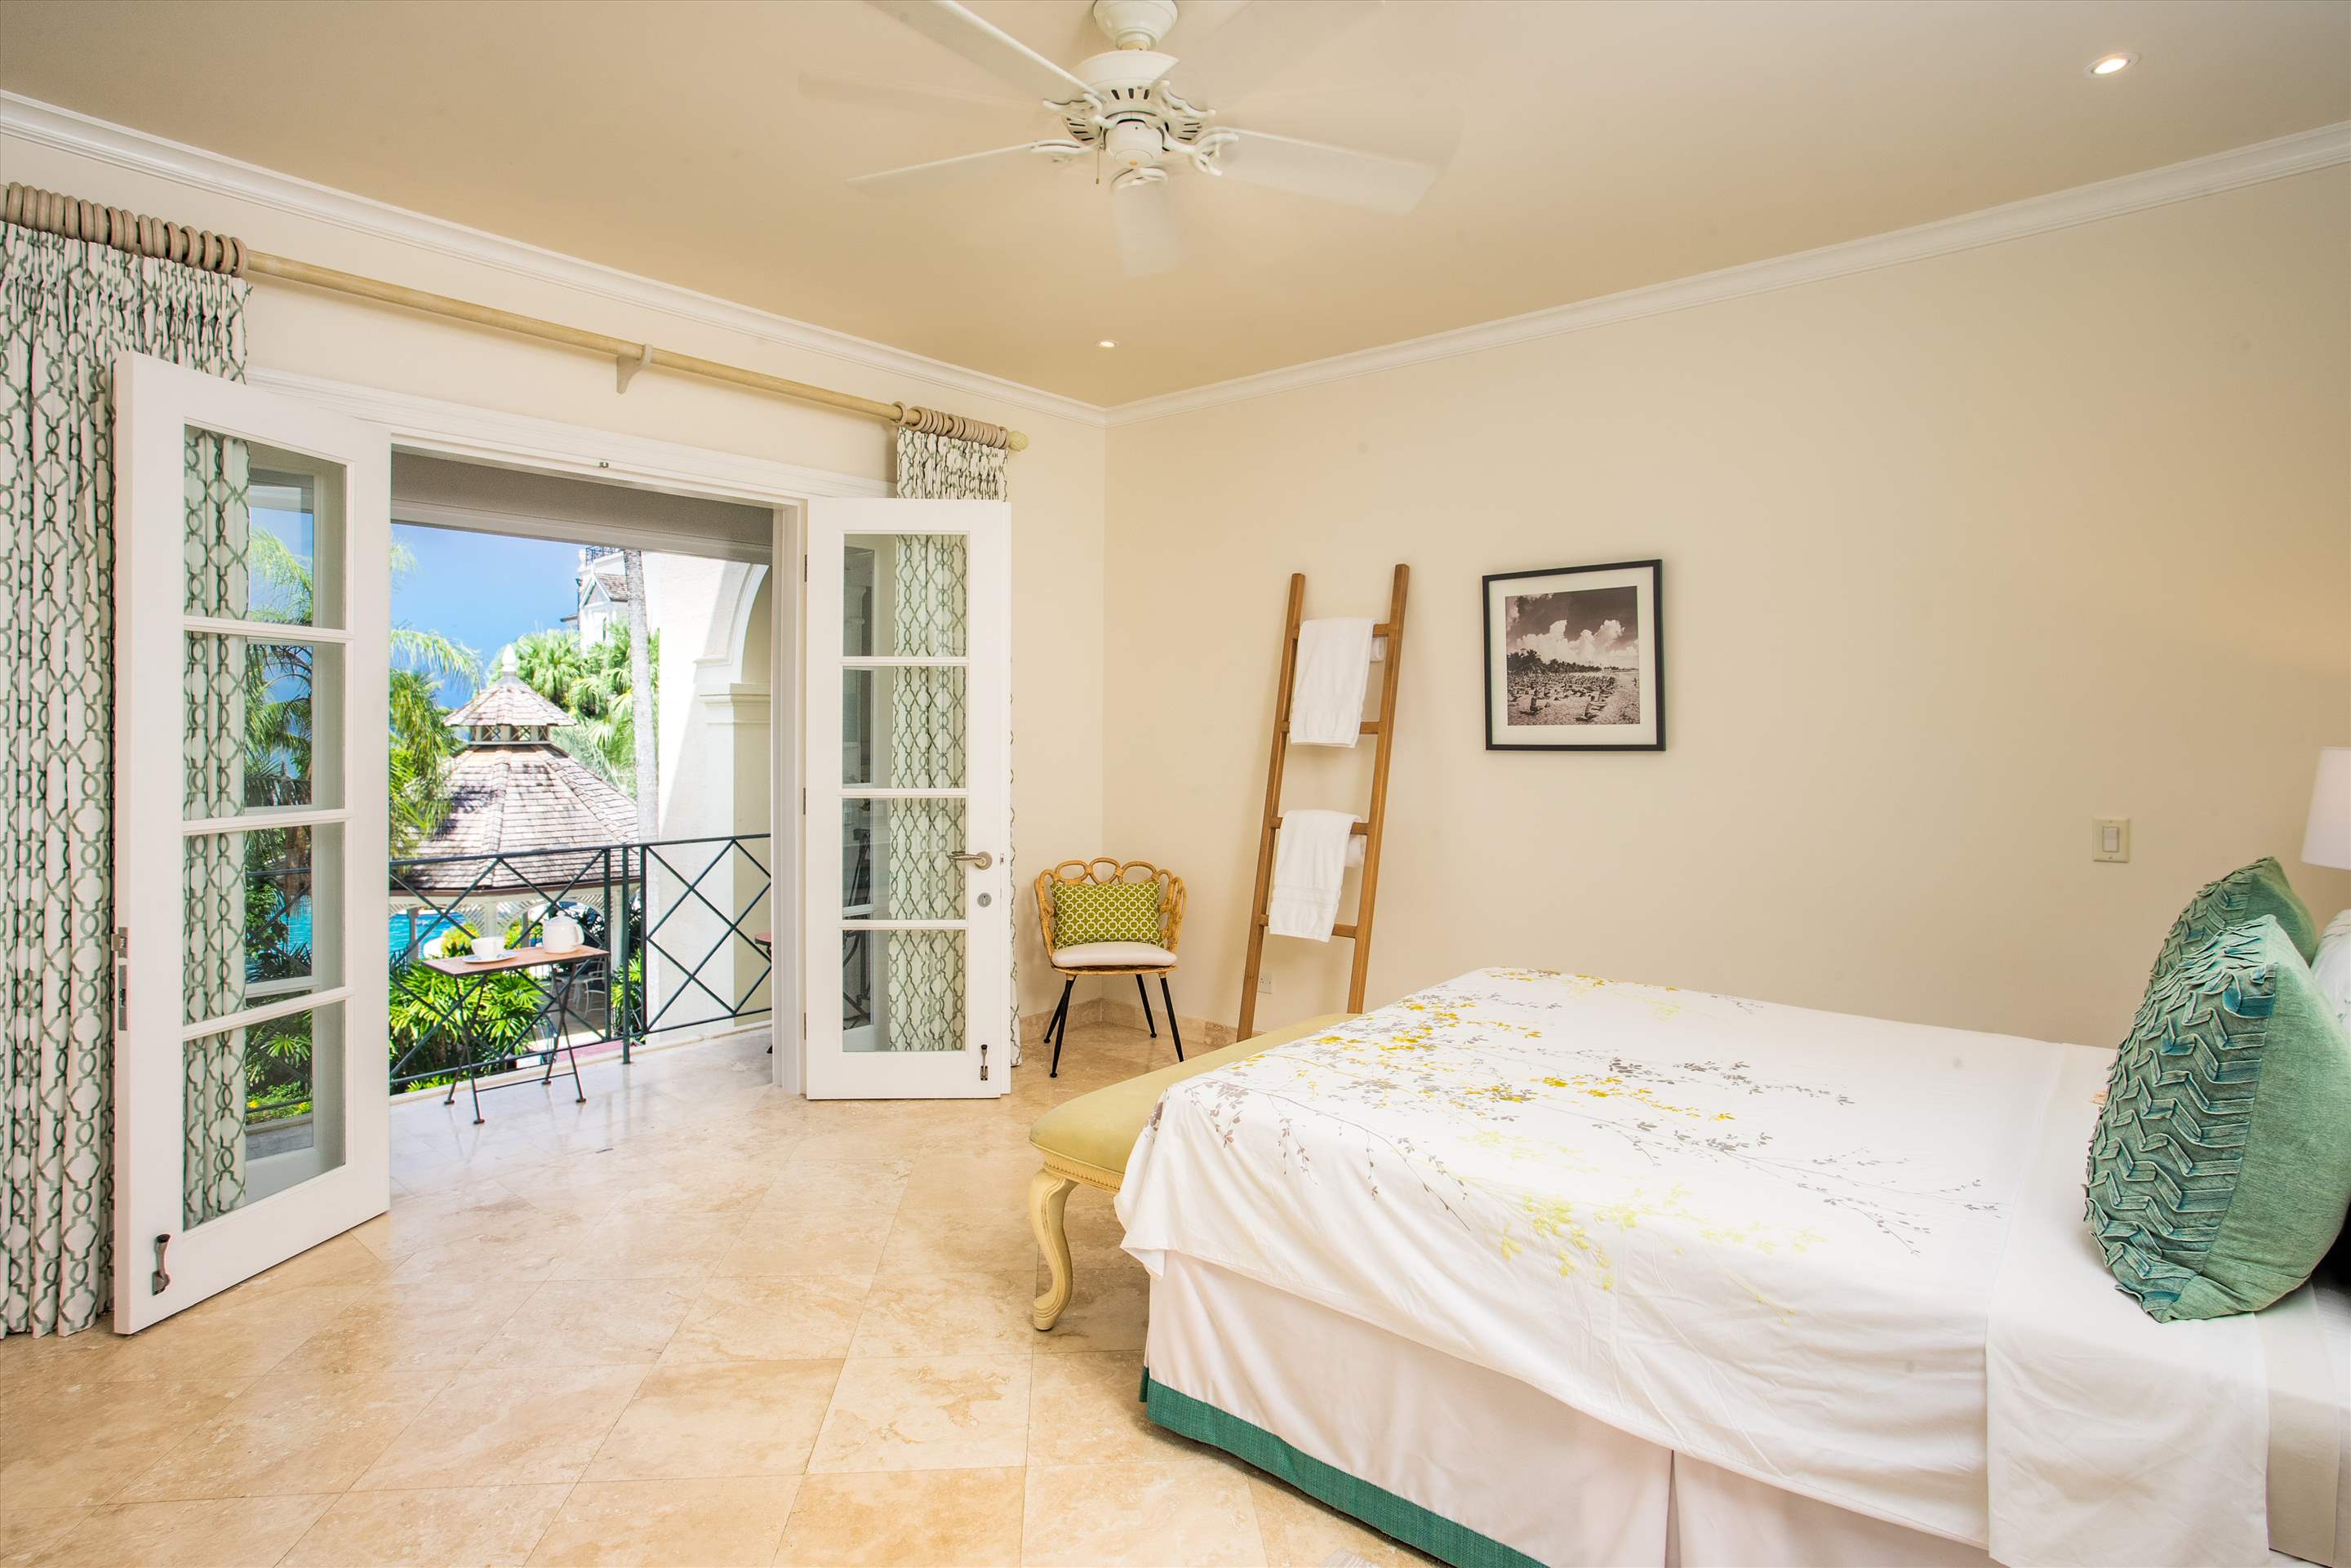 Schooner Bay 205, Two Bedroom rate, 2 bedroom apartment in St. James & West Coast, Barbados Photo #8